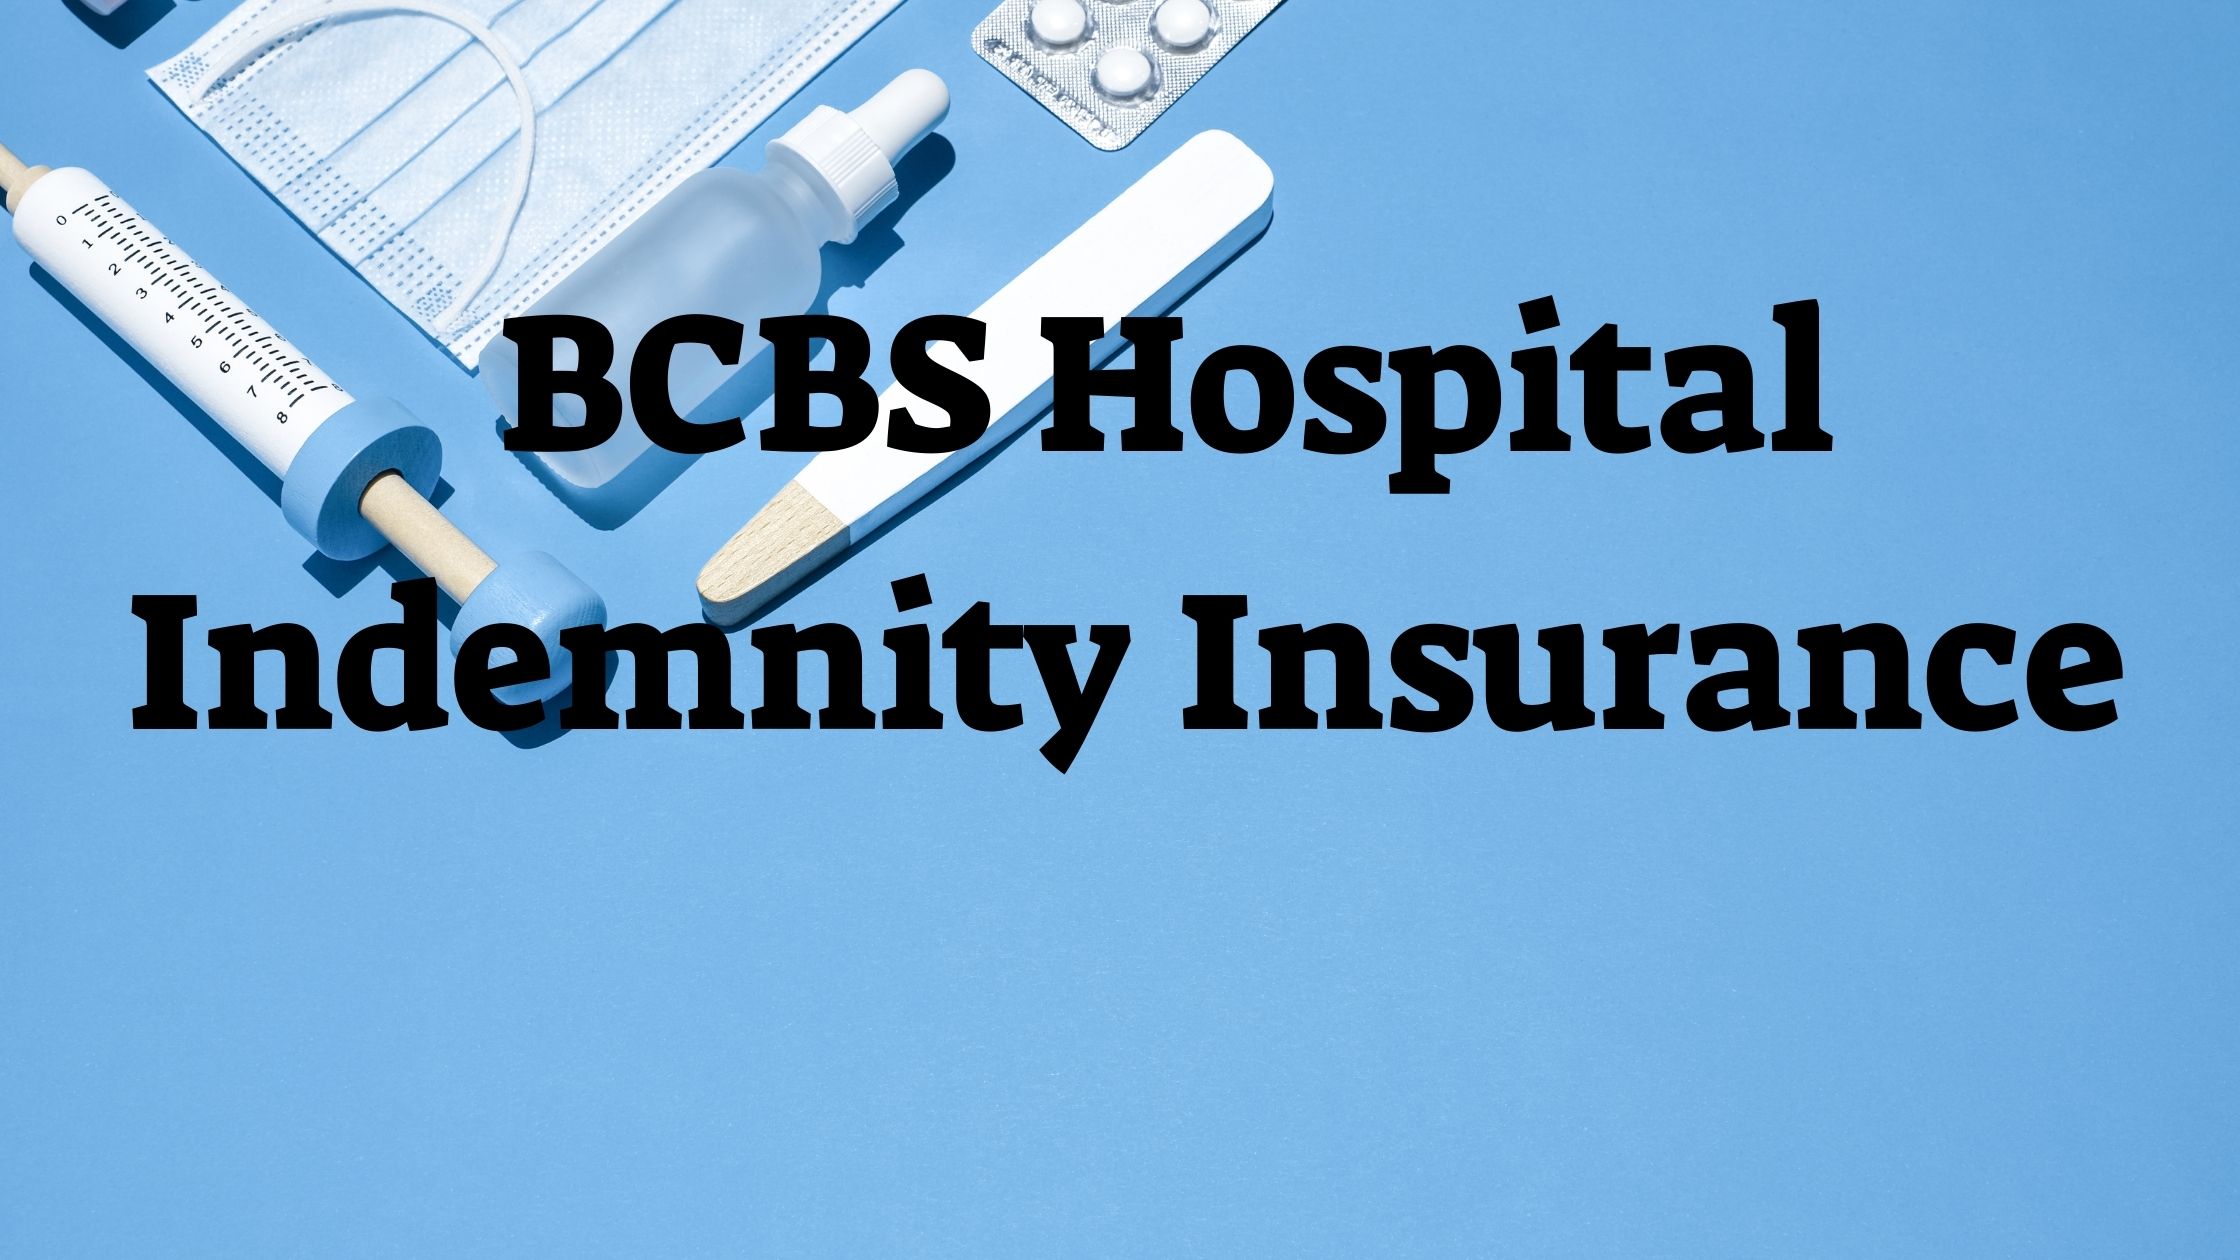 BCBS Hospital Indemnity Insurance